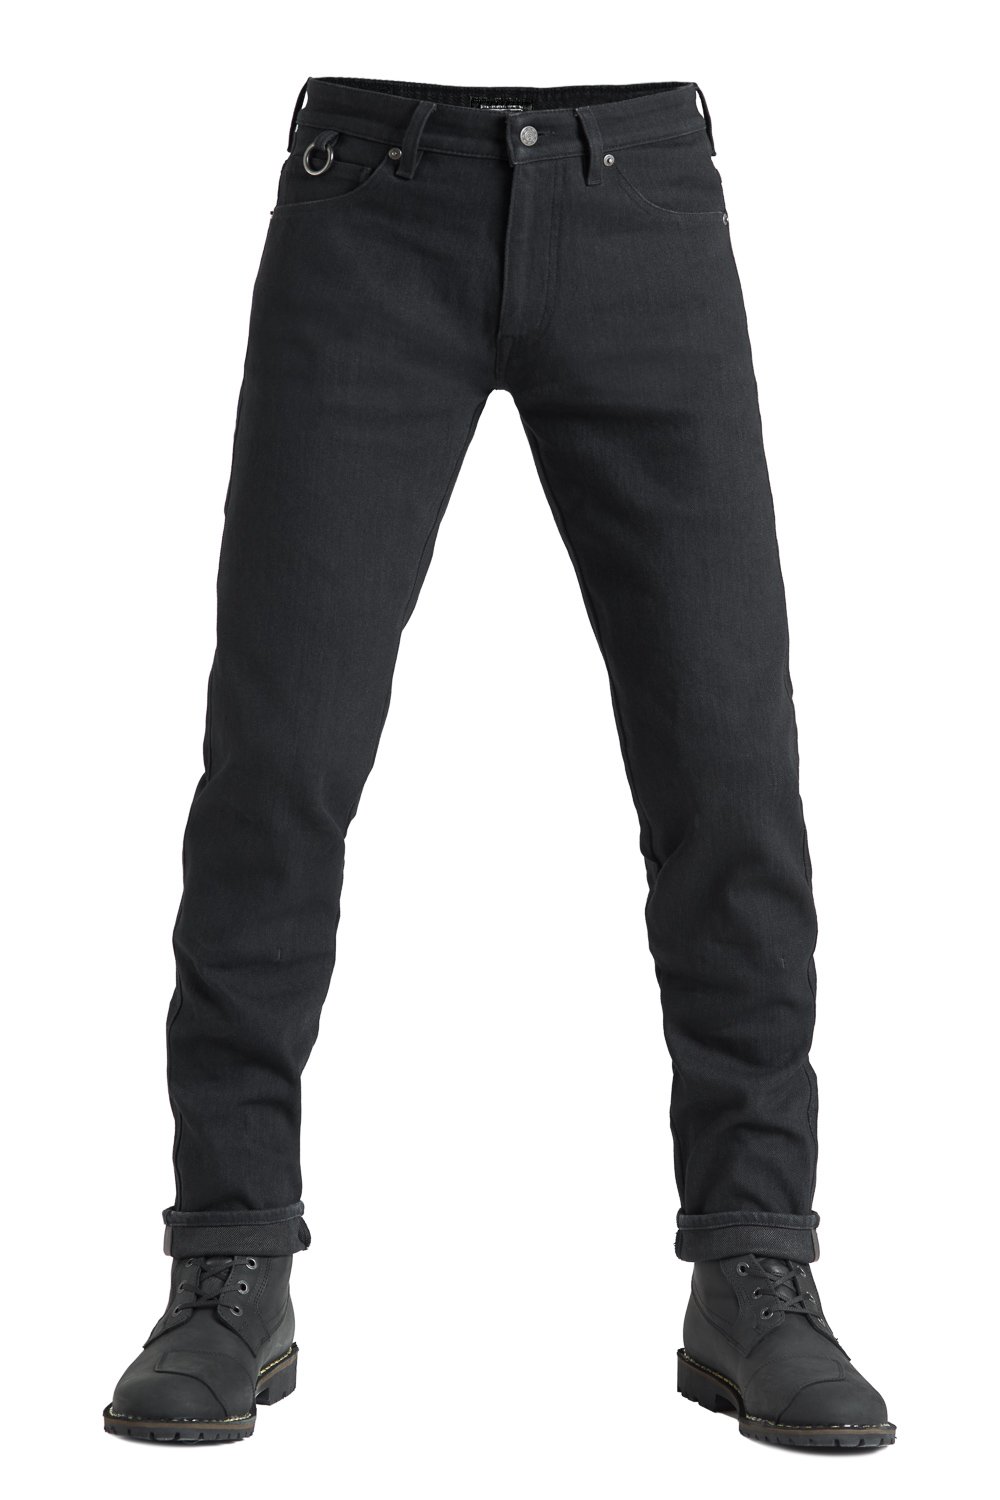 Image of EU Pando Moto Steel Noir 02 Slim Fit Dyneema® Pantalon Taille W34/L34